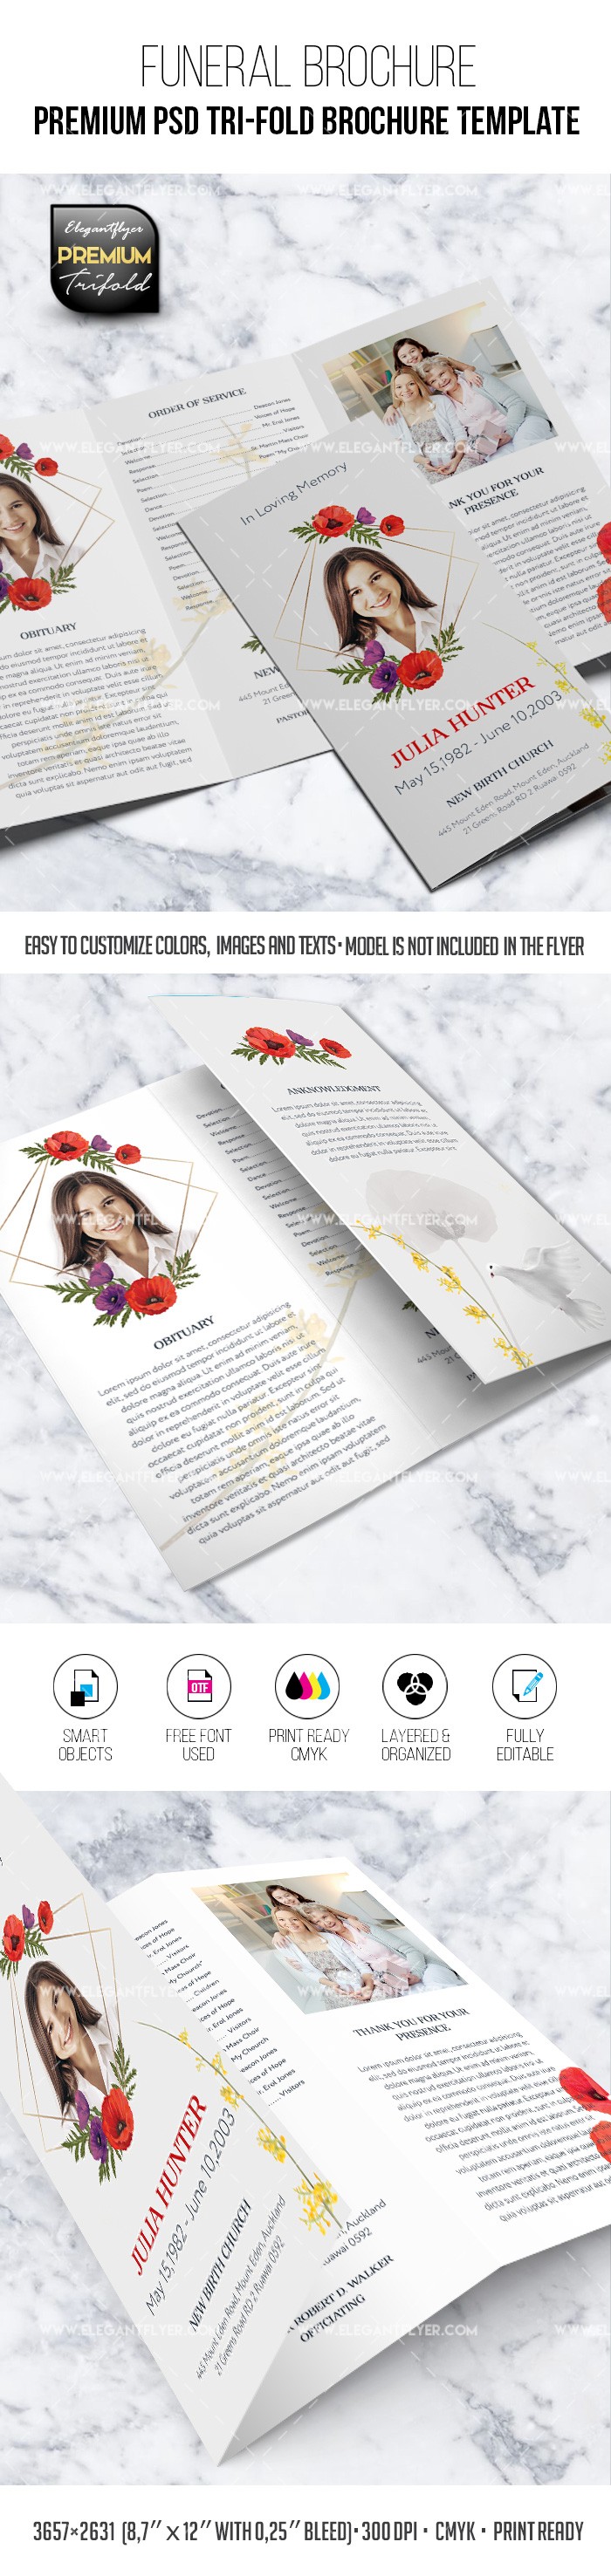 Funeral Program – Premium PSD Tri-Fold Brochure Template by ElegantFlyer